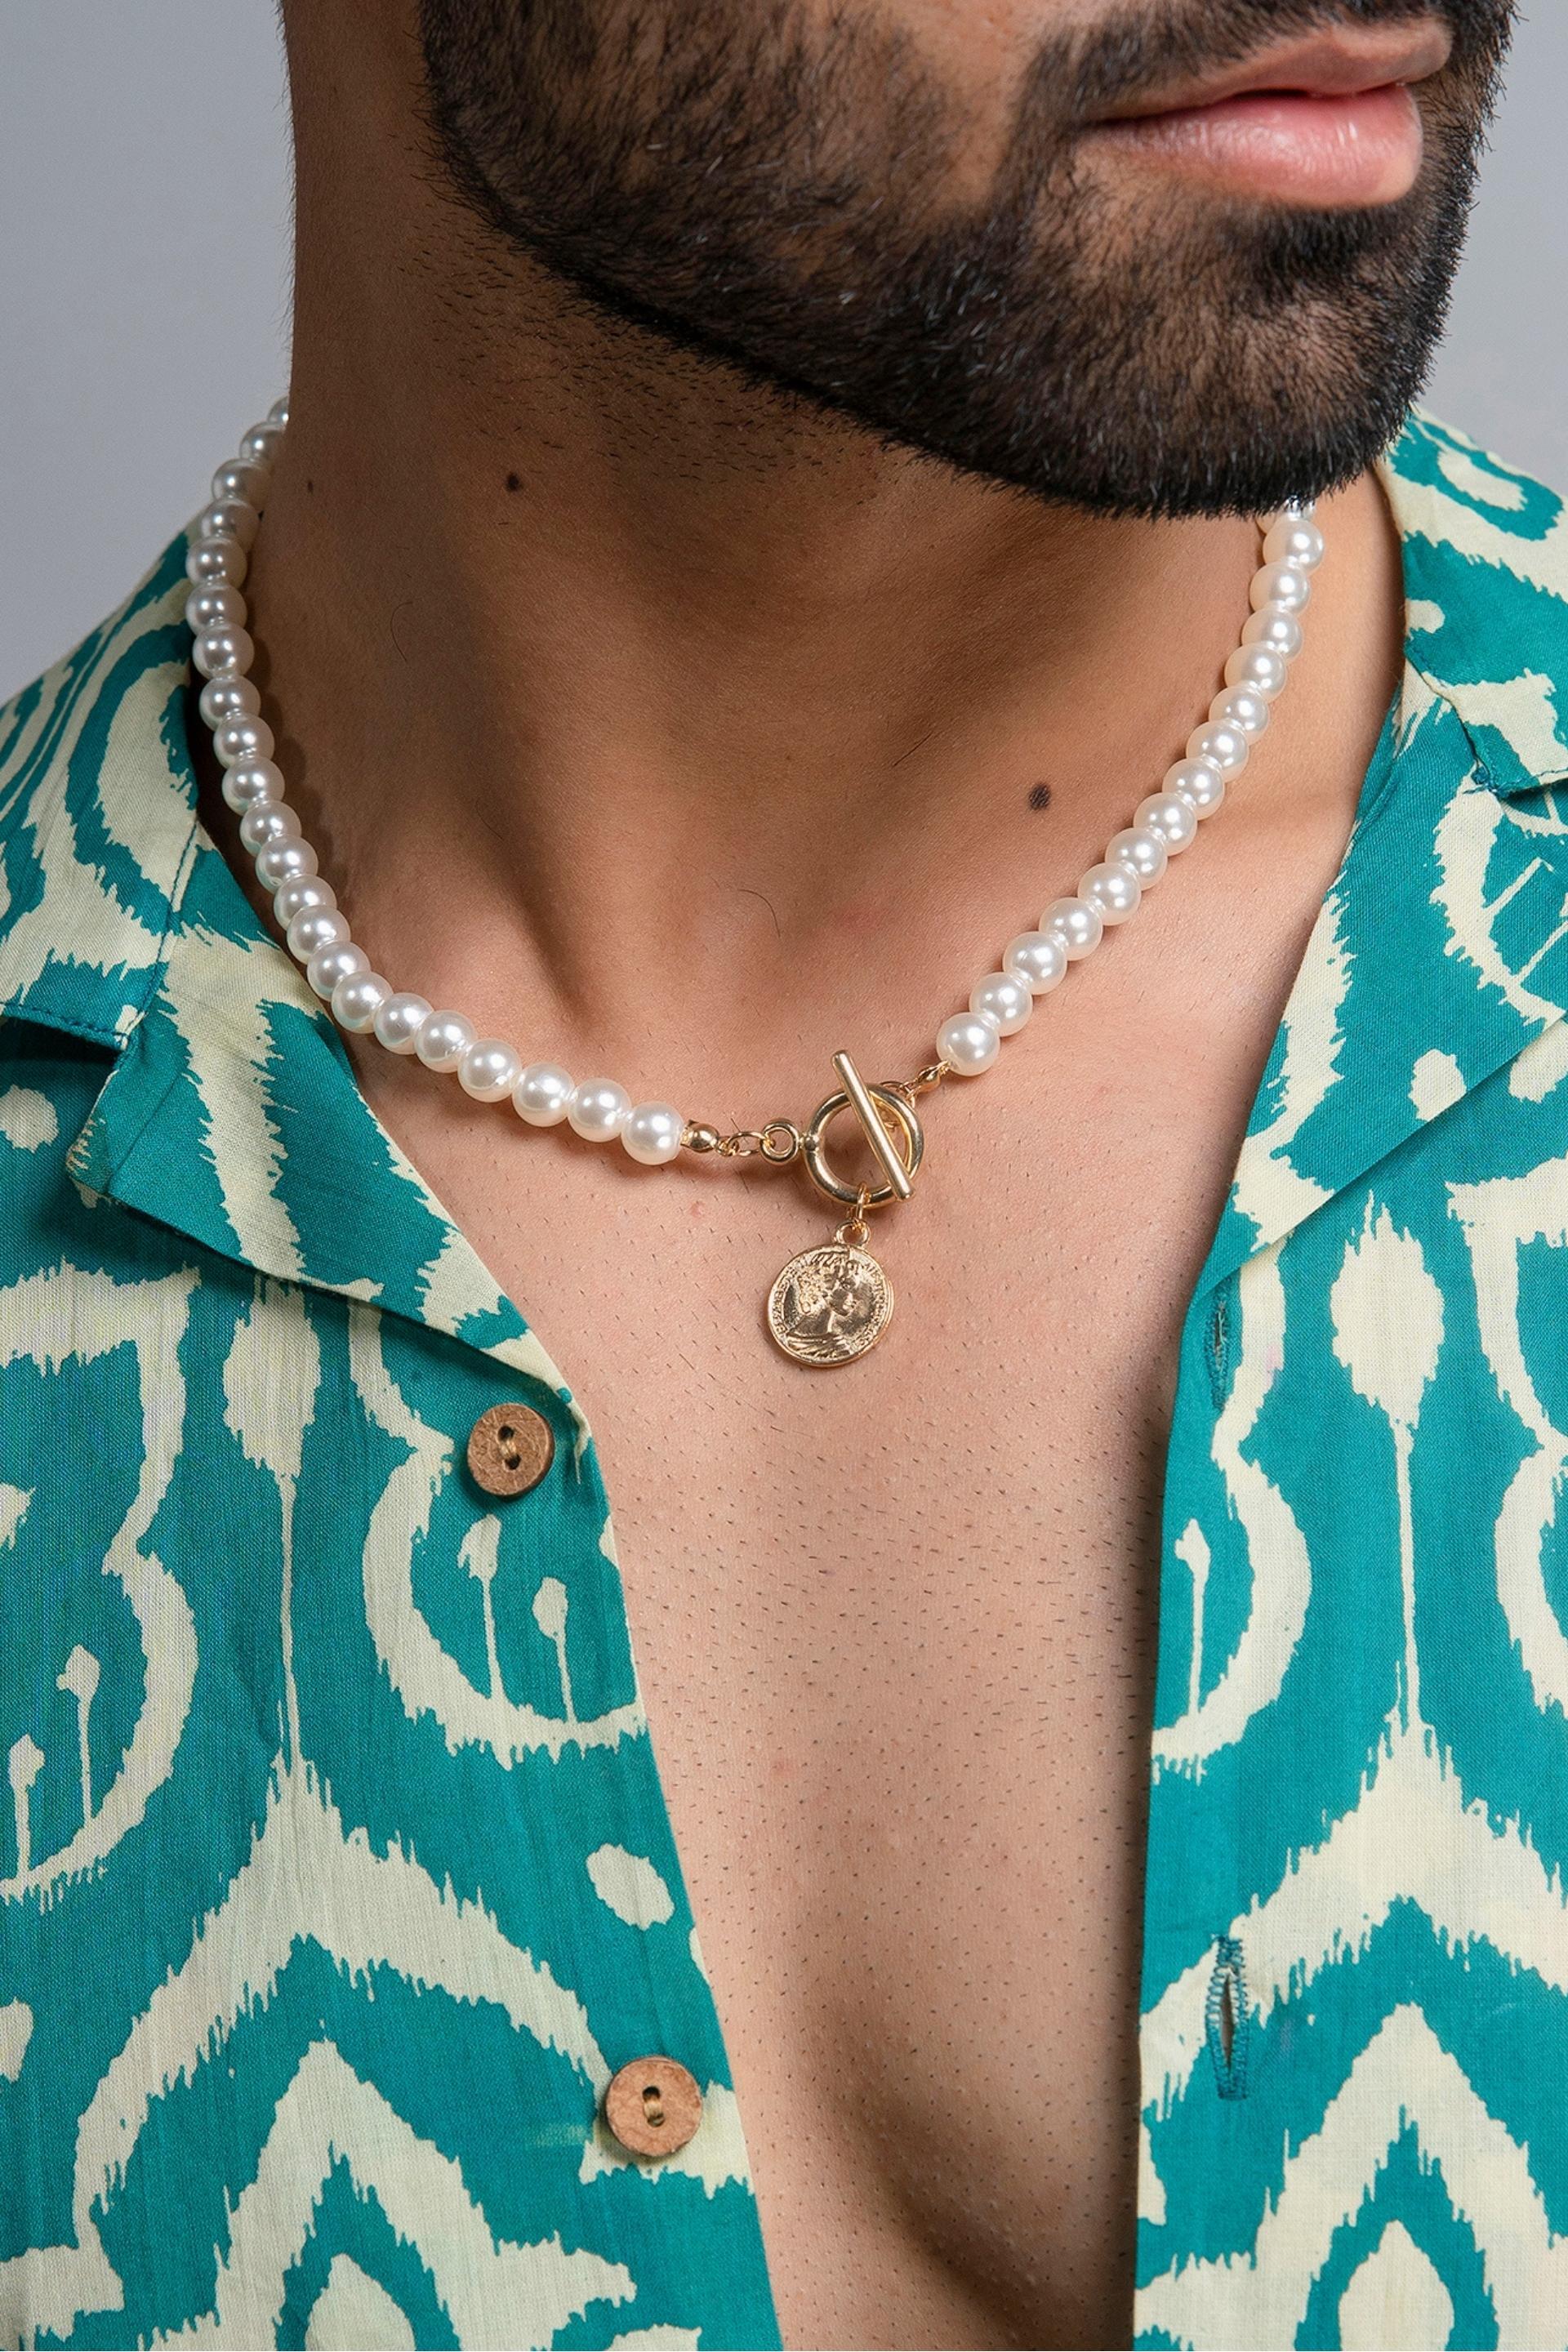 Firangi Yarn Alloy lock Imitation Pearl Necklace For Men